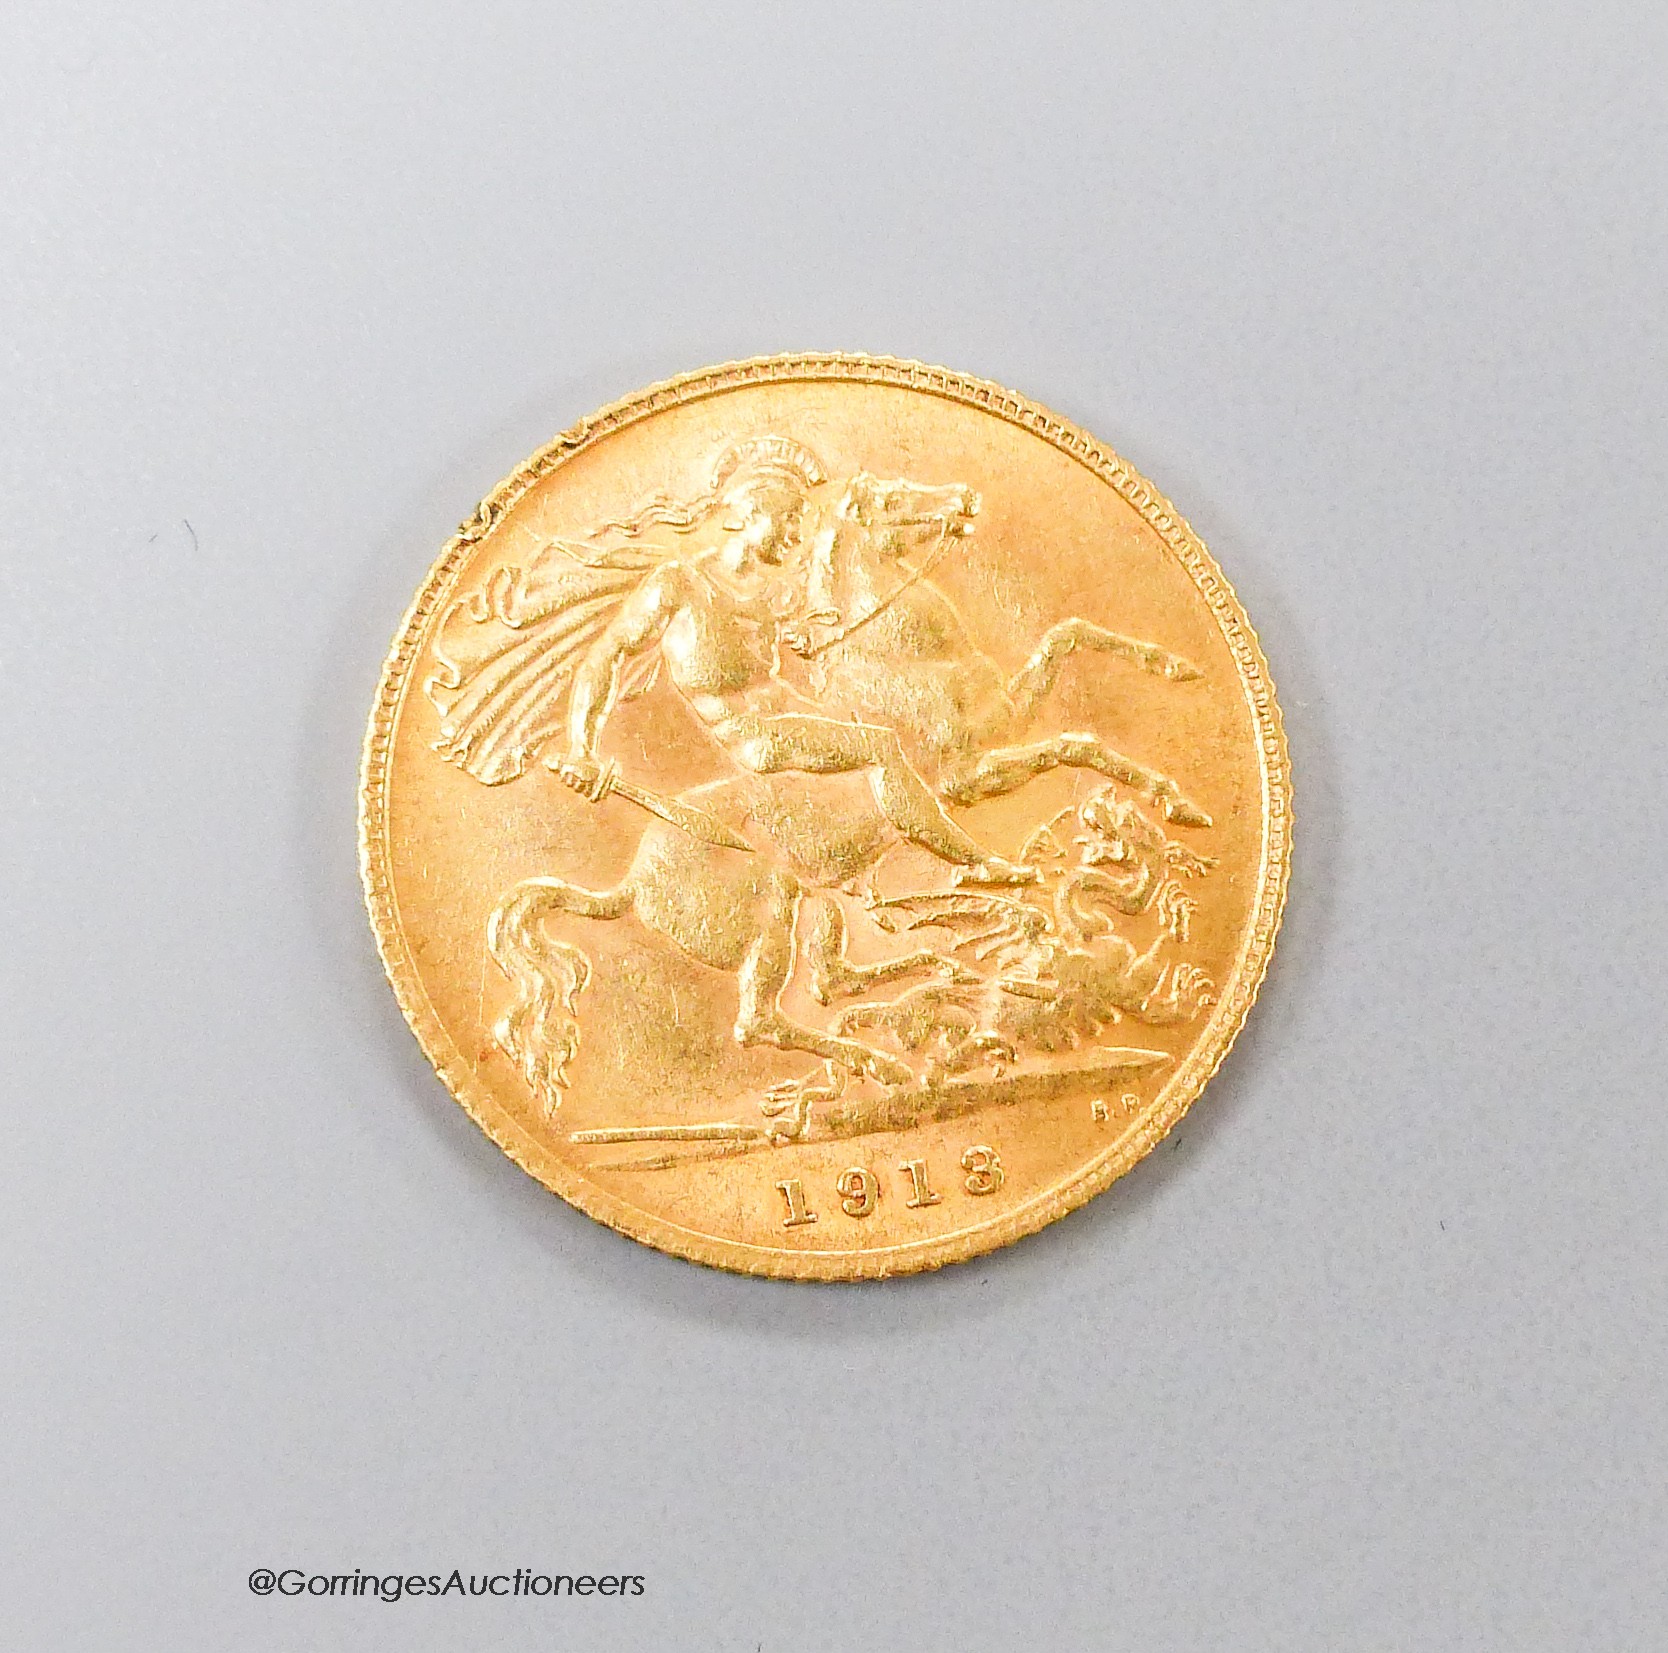 A George VI gold half sovereign